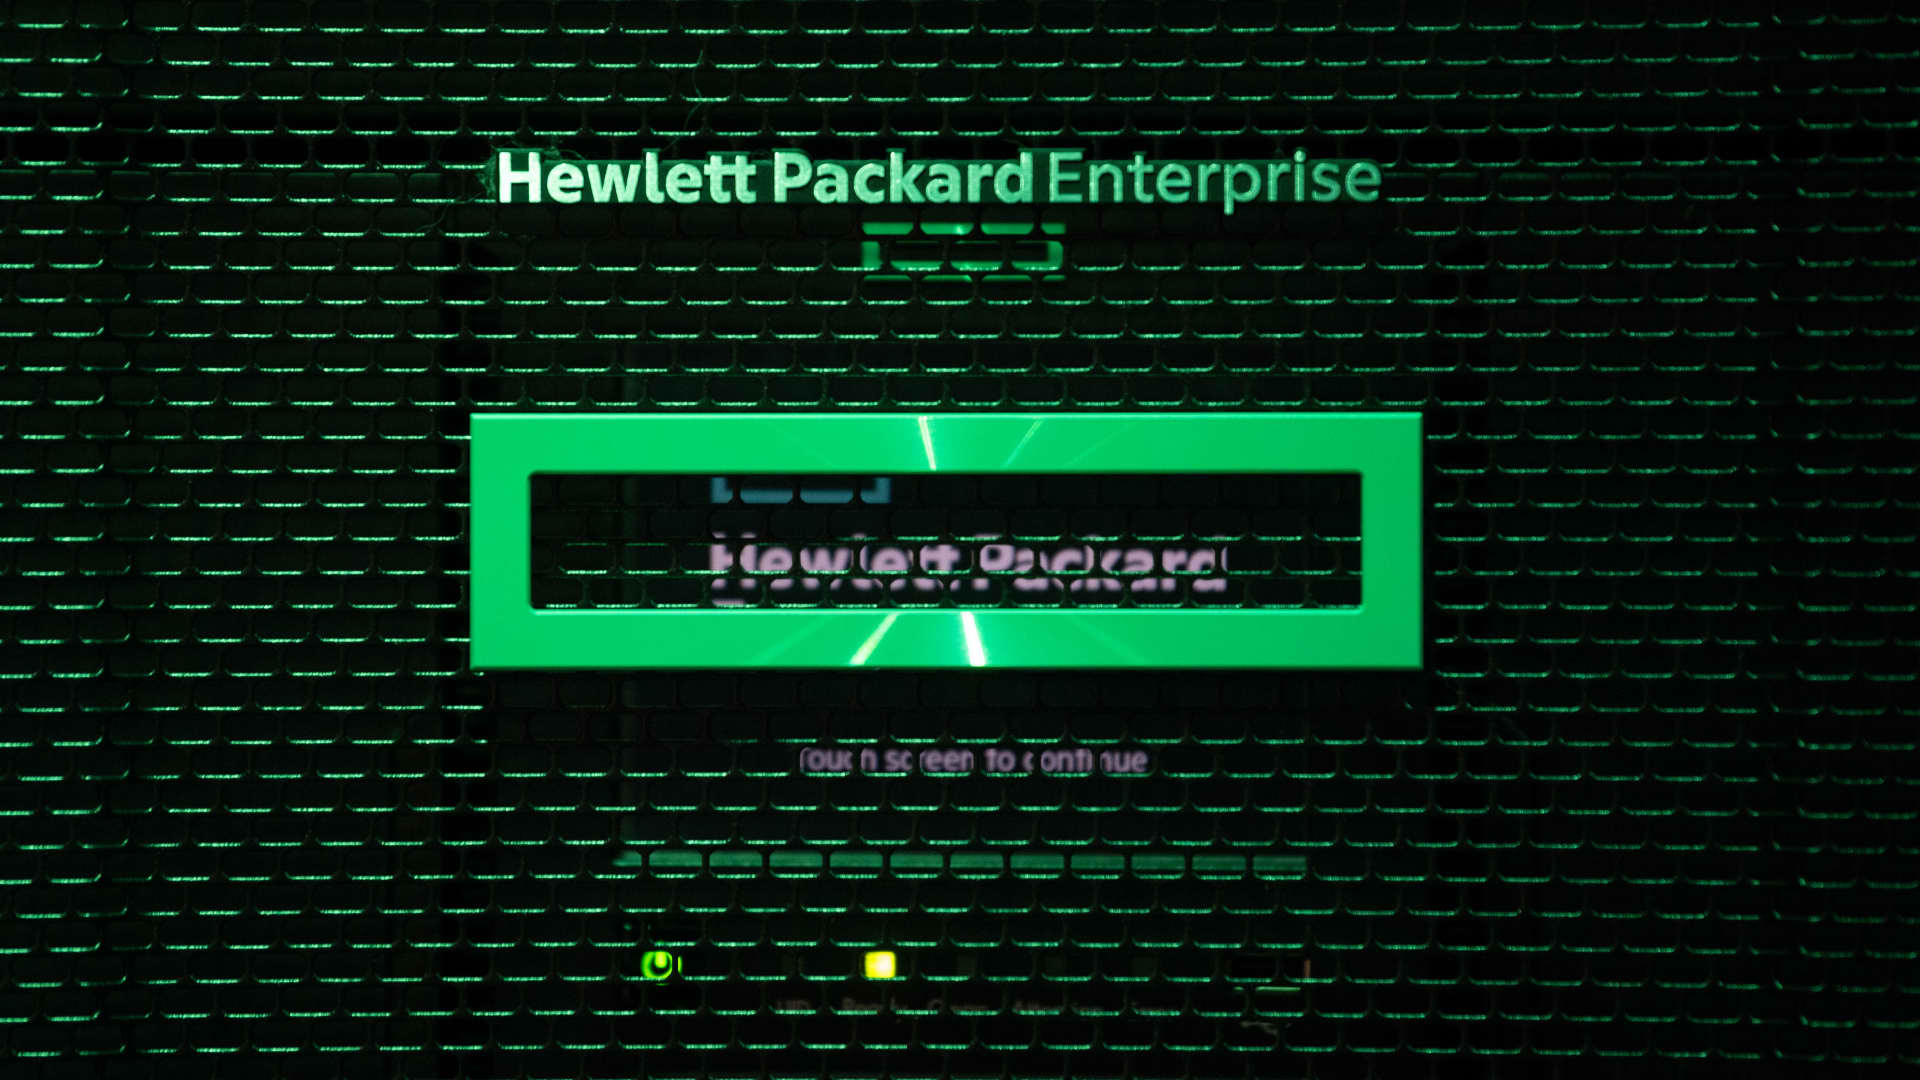 Deutsche downgrades Hewlett Packard Enterprise, citing potential slowdown in IT spending